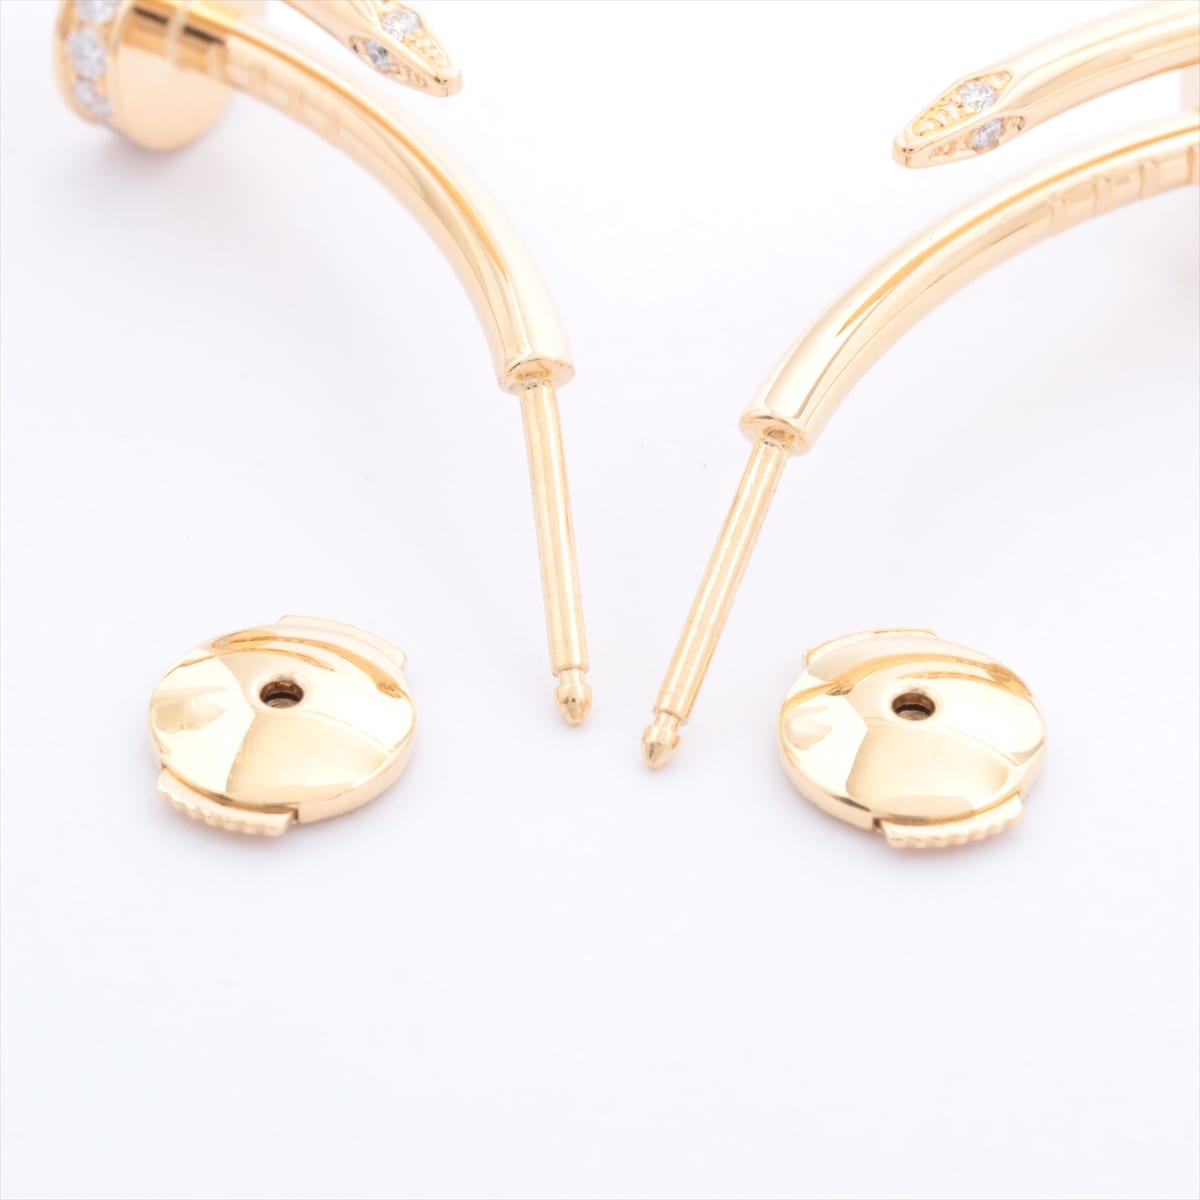 Cartier Juste un Clou diamond Piercing jewelry 750 YG 10.5g